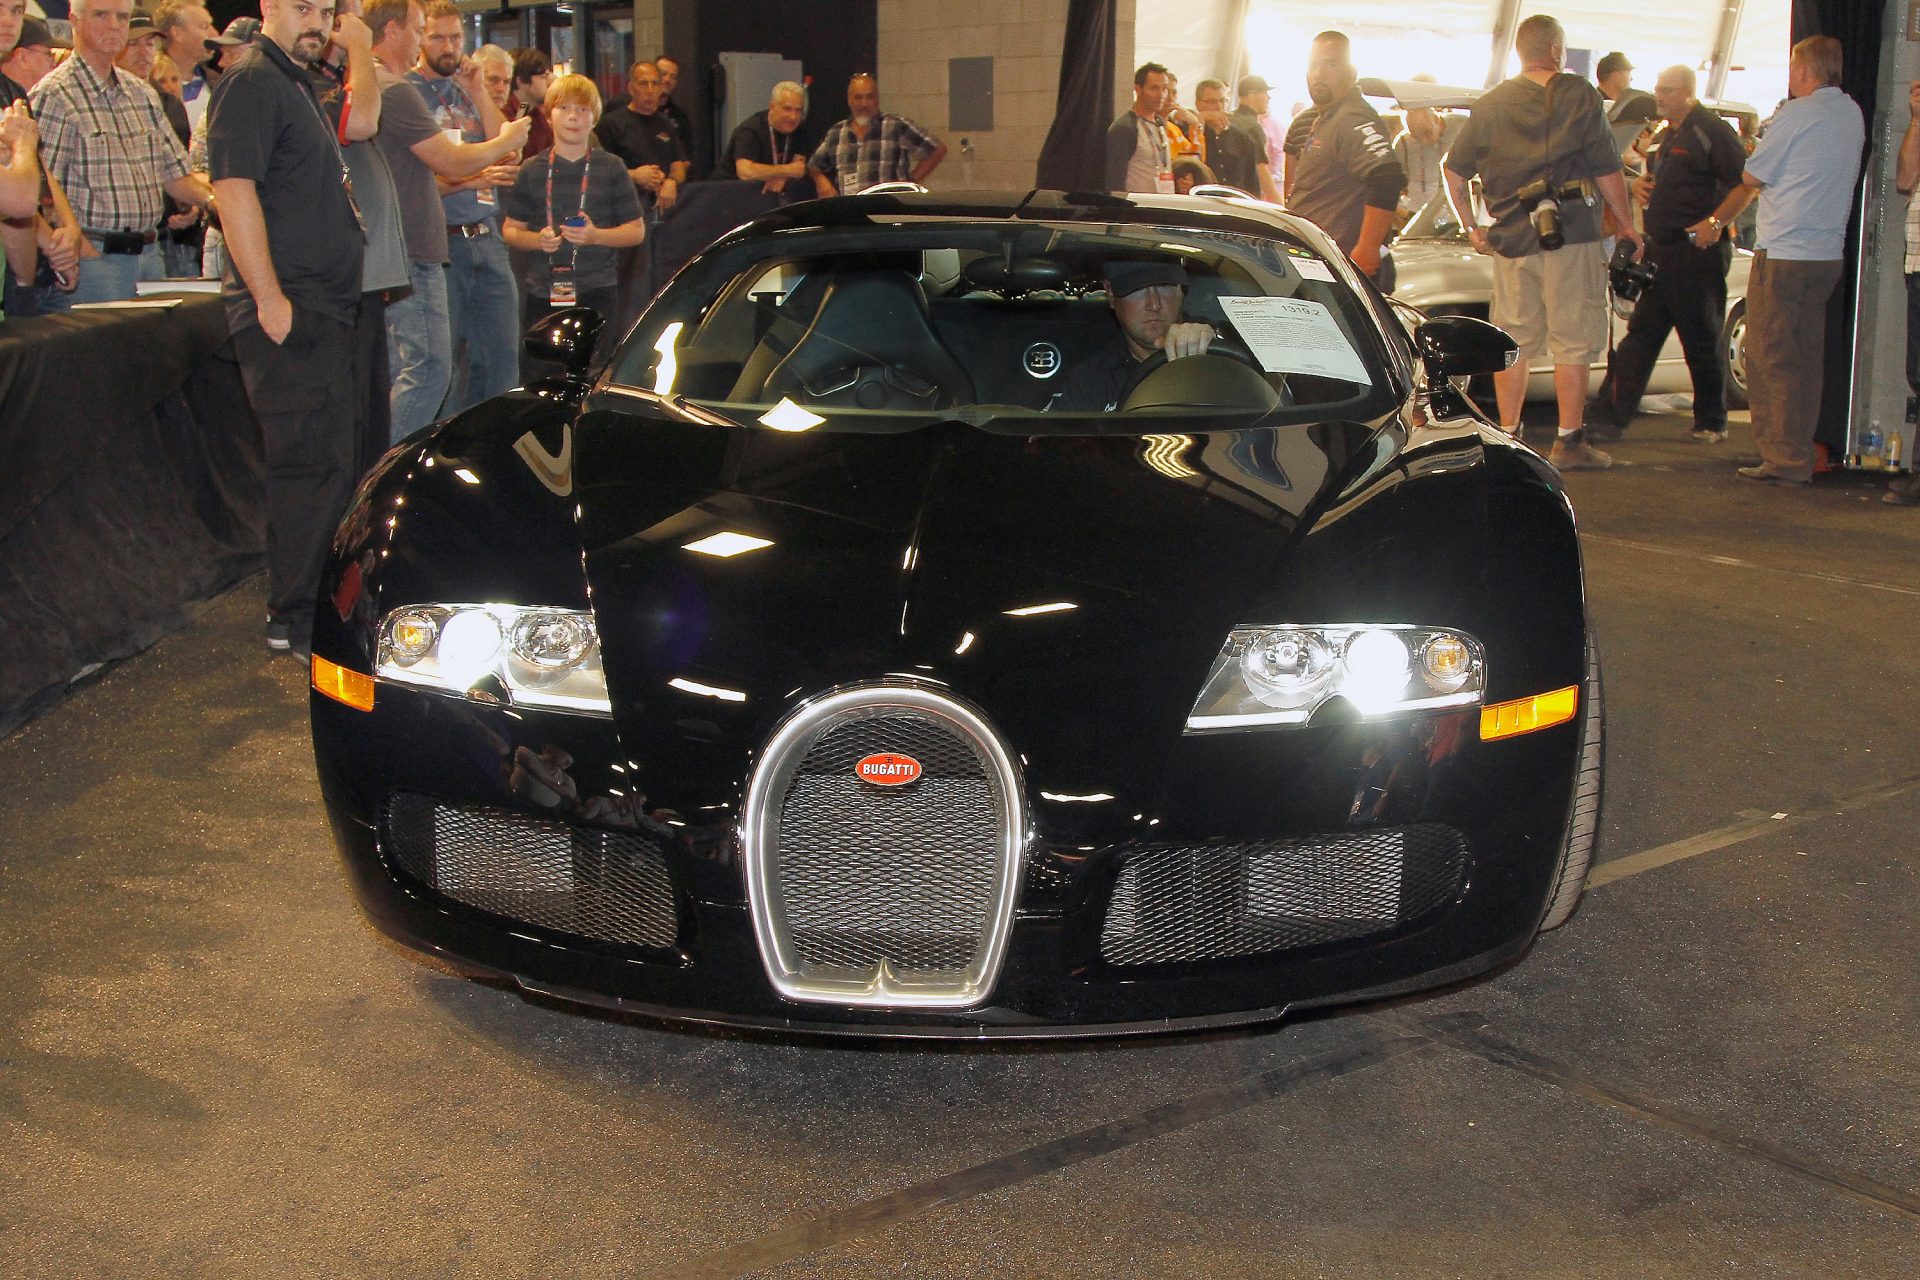 Subastando el Bugatti de Simon Cowell